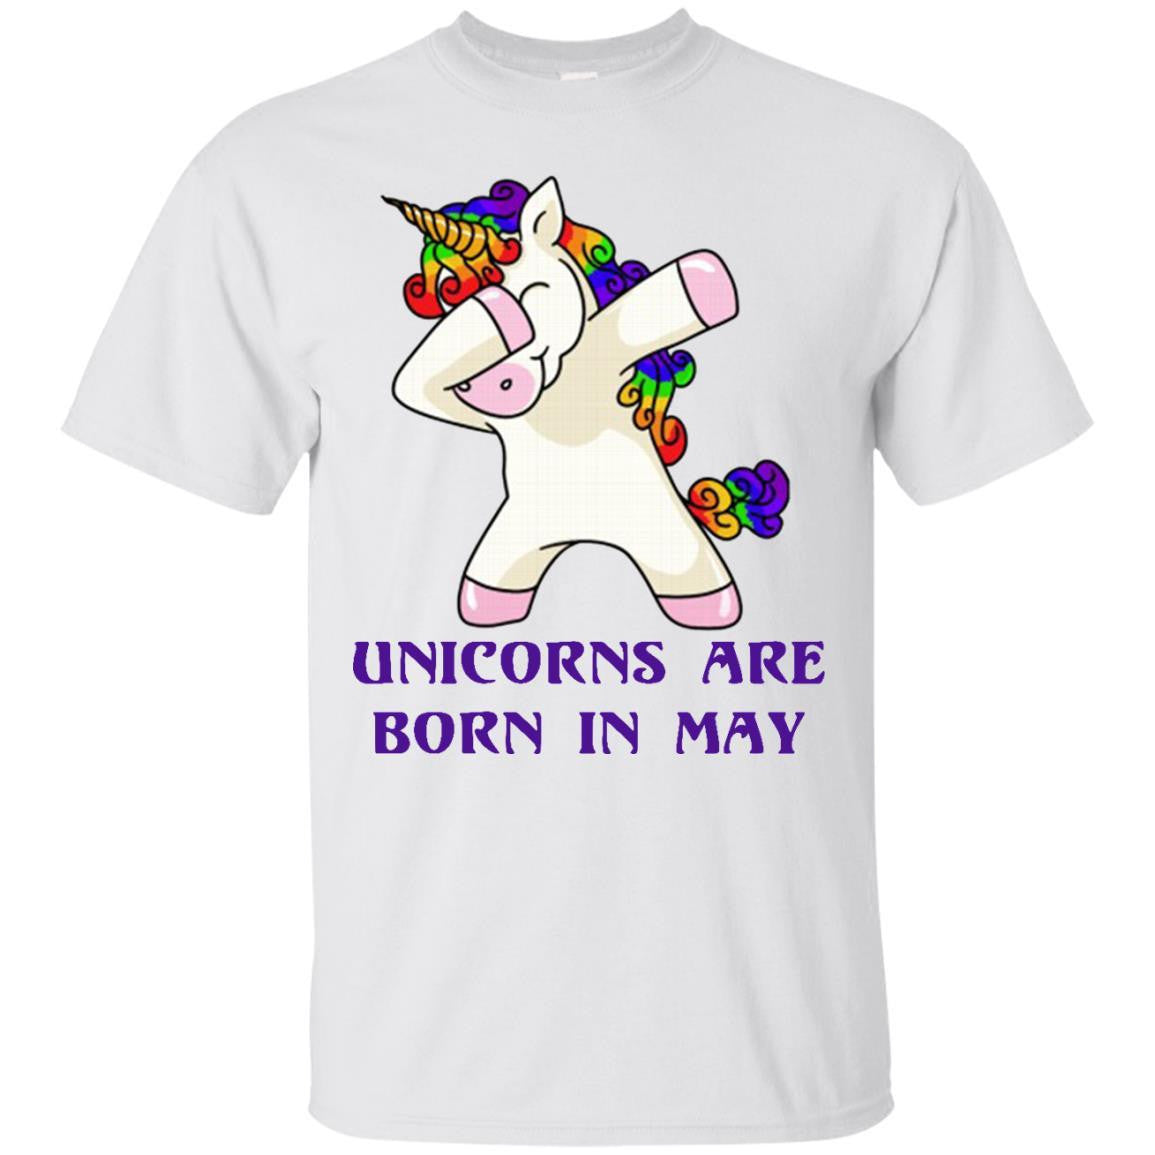 Dabbing Unicorns are Born in May shirt, tank top, racerback